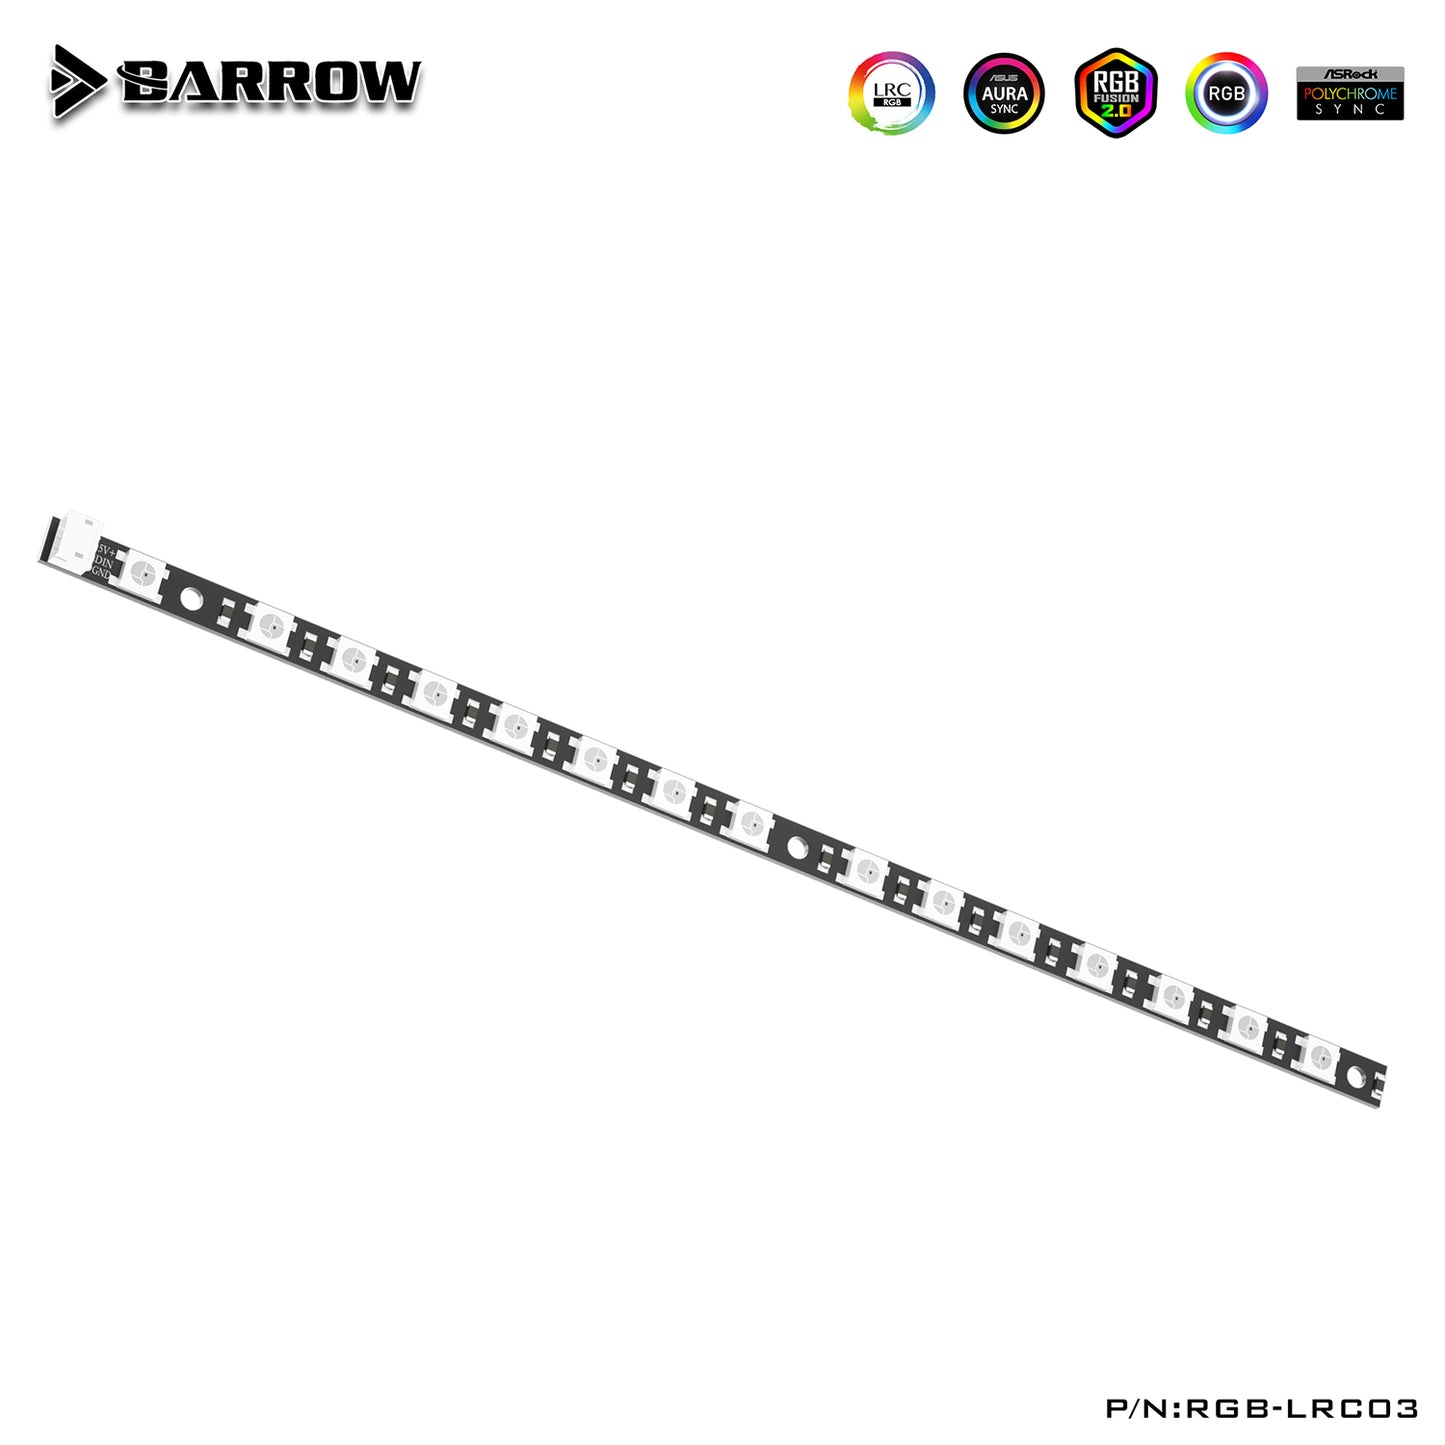 Barrow LRC2.0 5v 3pin Light Strips, Special For Barrow Graphics Card Block, Aurora 15 Lighting Beads, RGB-LRC03